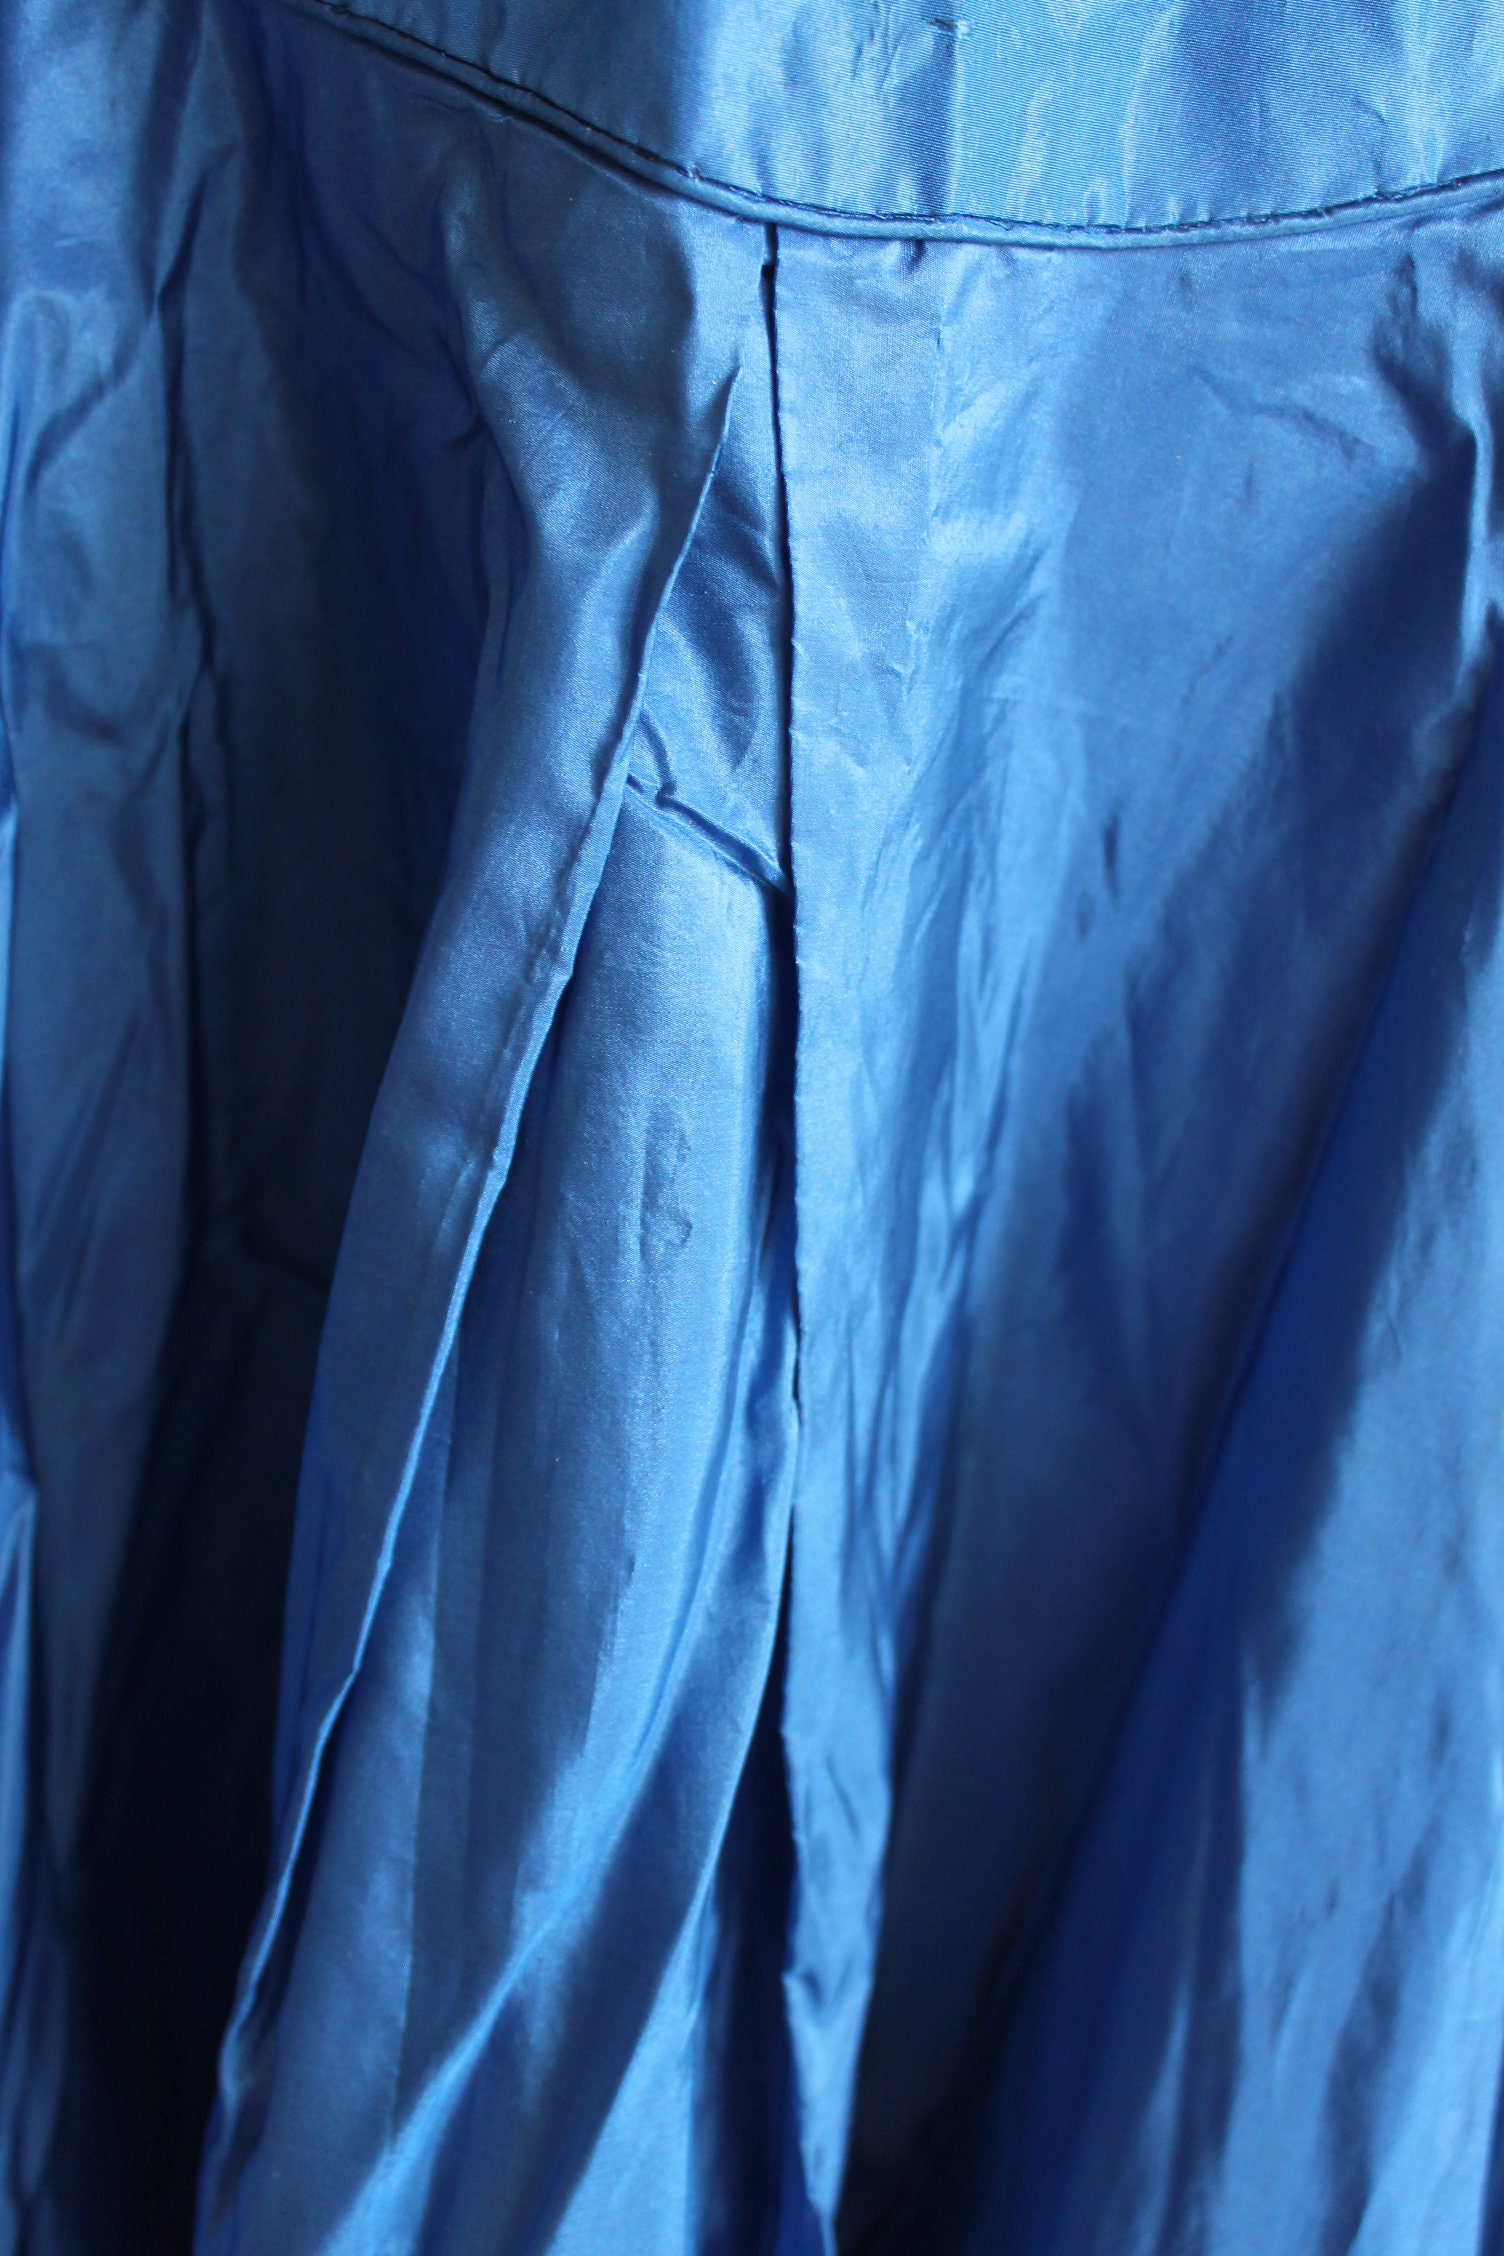 Victorian royal blue silk taffeta underskirt shiney deep blue | Etsy